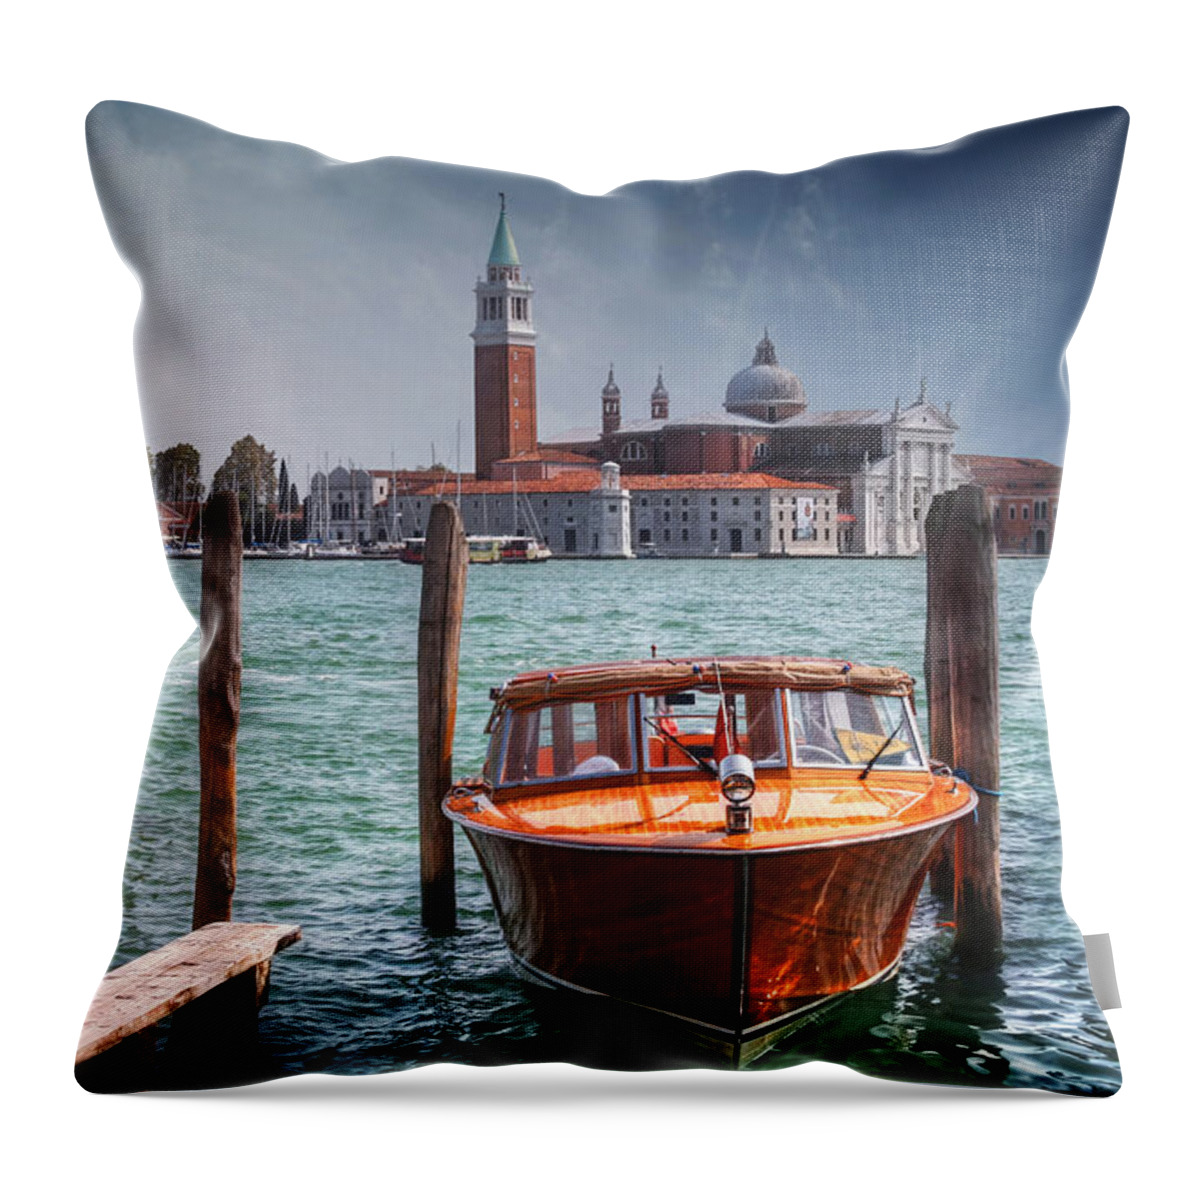 Venice Throw Pillow featuring the photograph Enchanting Venice by Carol Japp